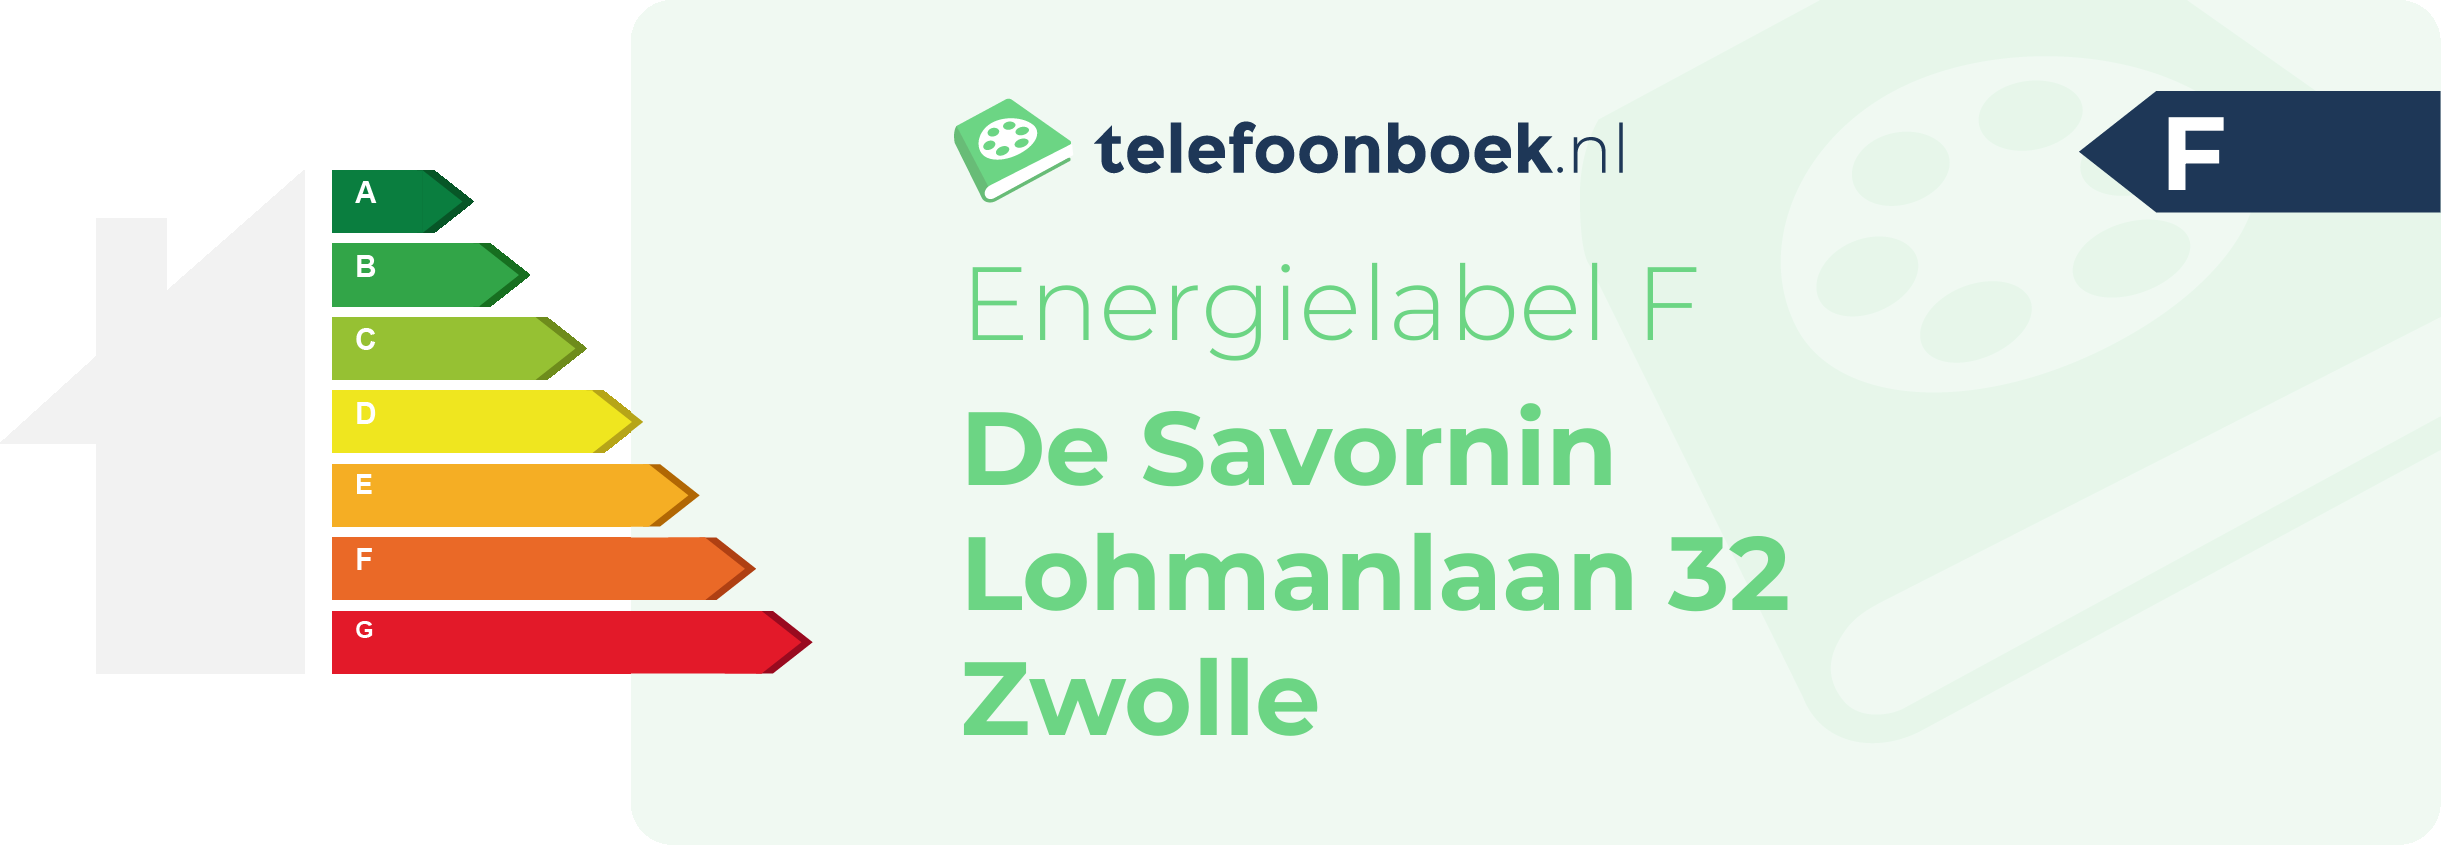 Energielabel De Savornin Lohmanlaan 32 Zwolle